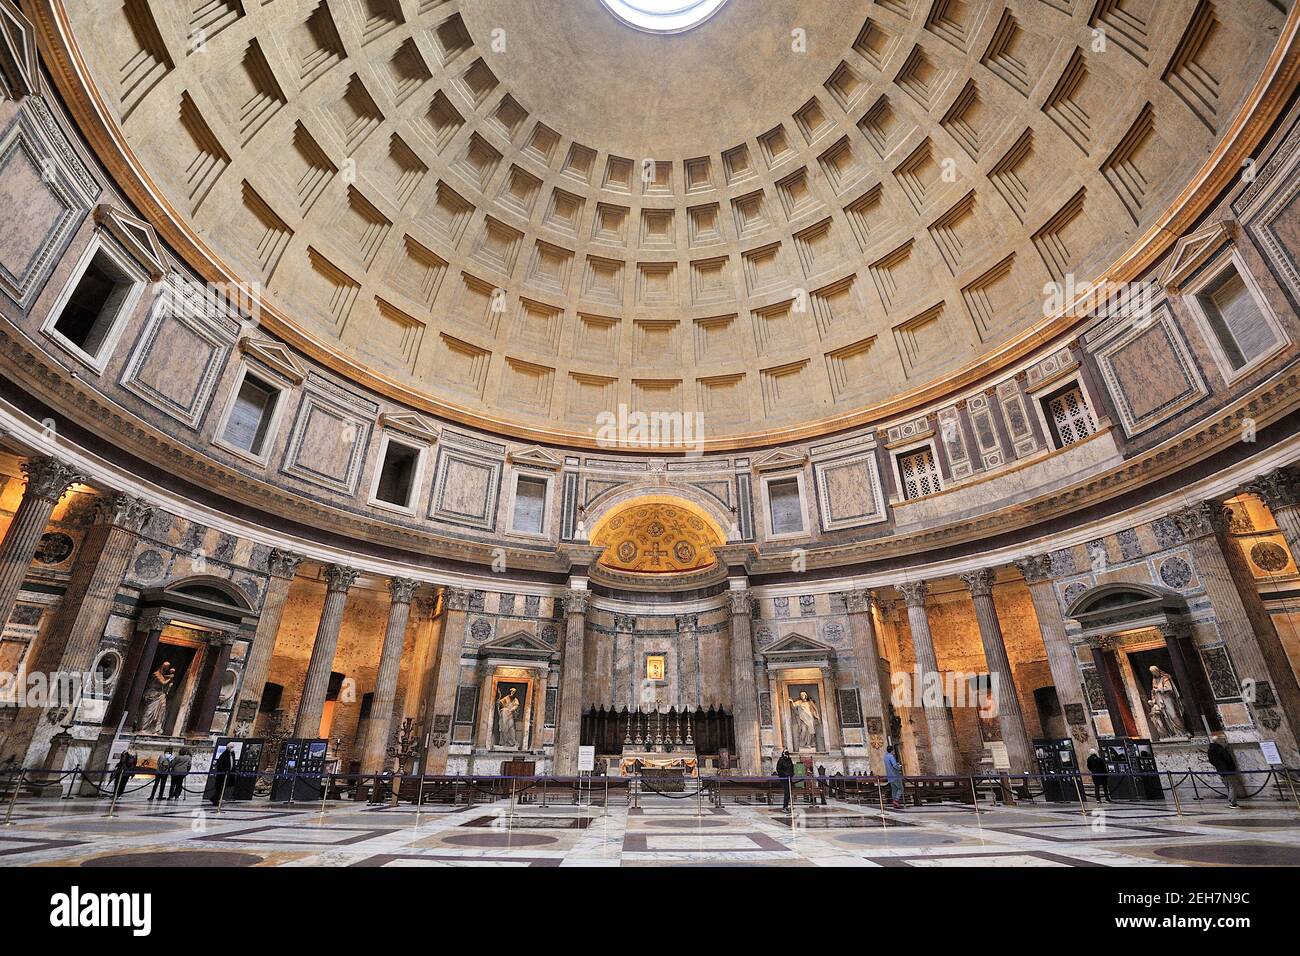 Italia, Roma, el panteón interior Foto de stock